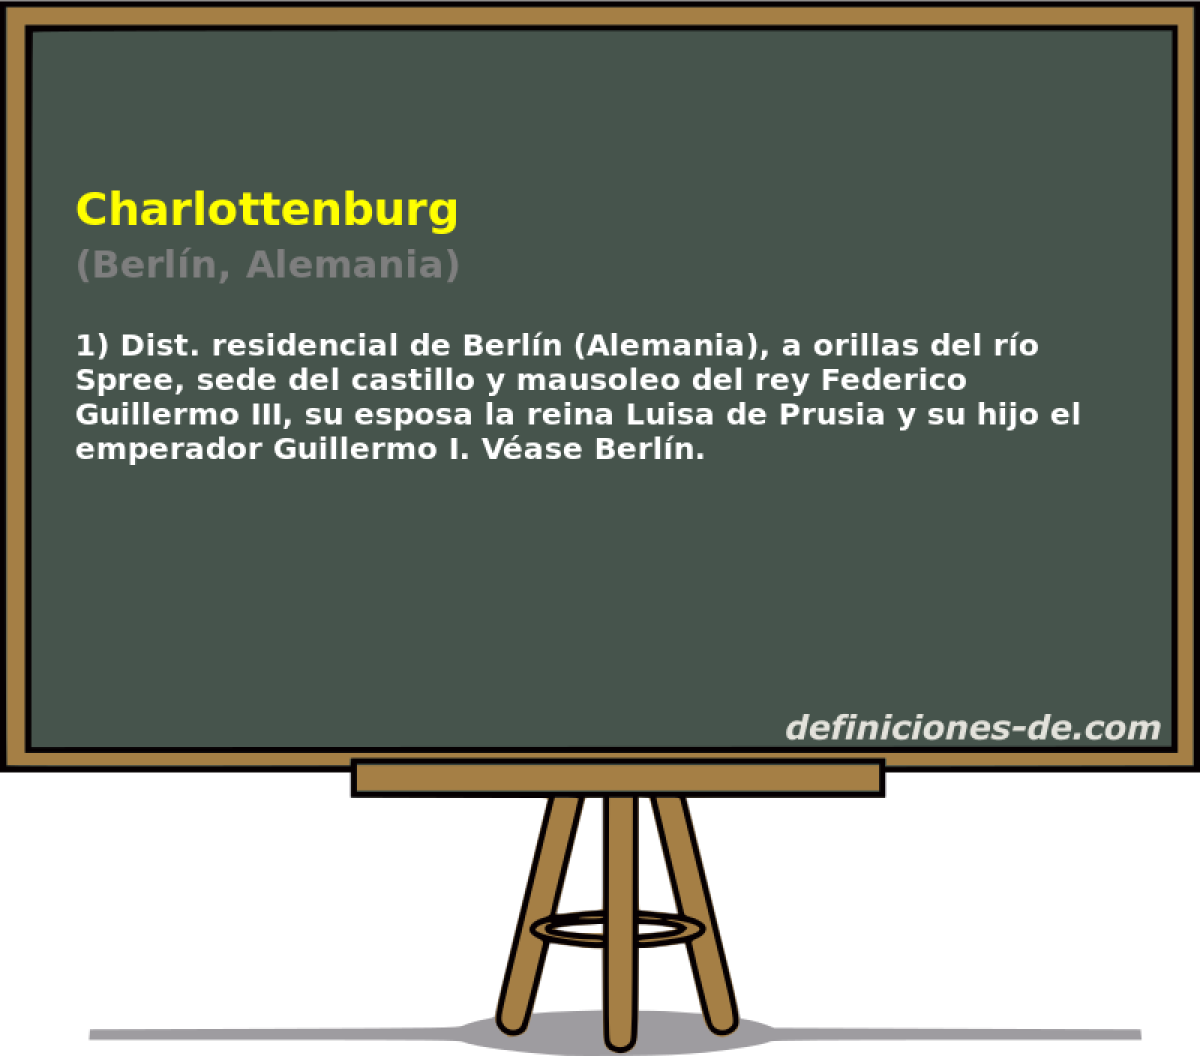 Charlottenburg (Berln, Alemania)